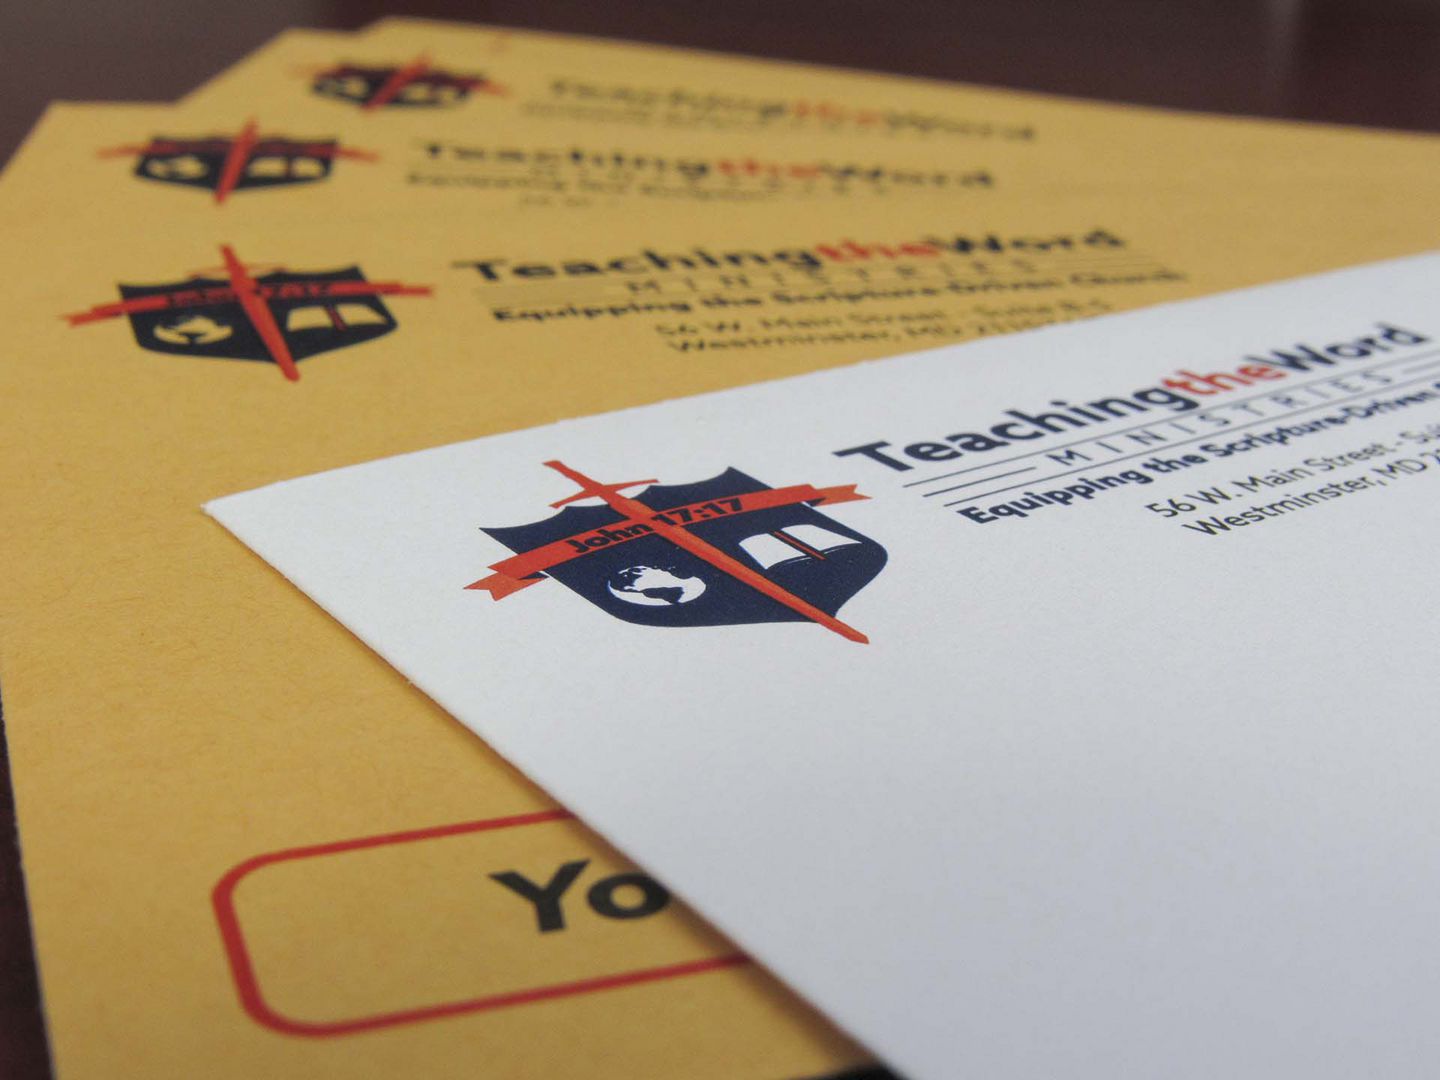 The TeachingTheWord logo printed on several envelopes.